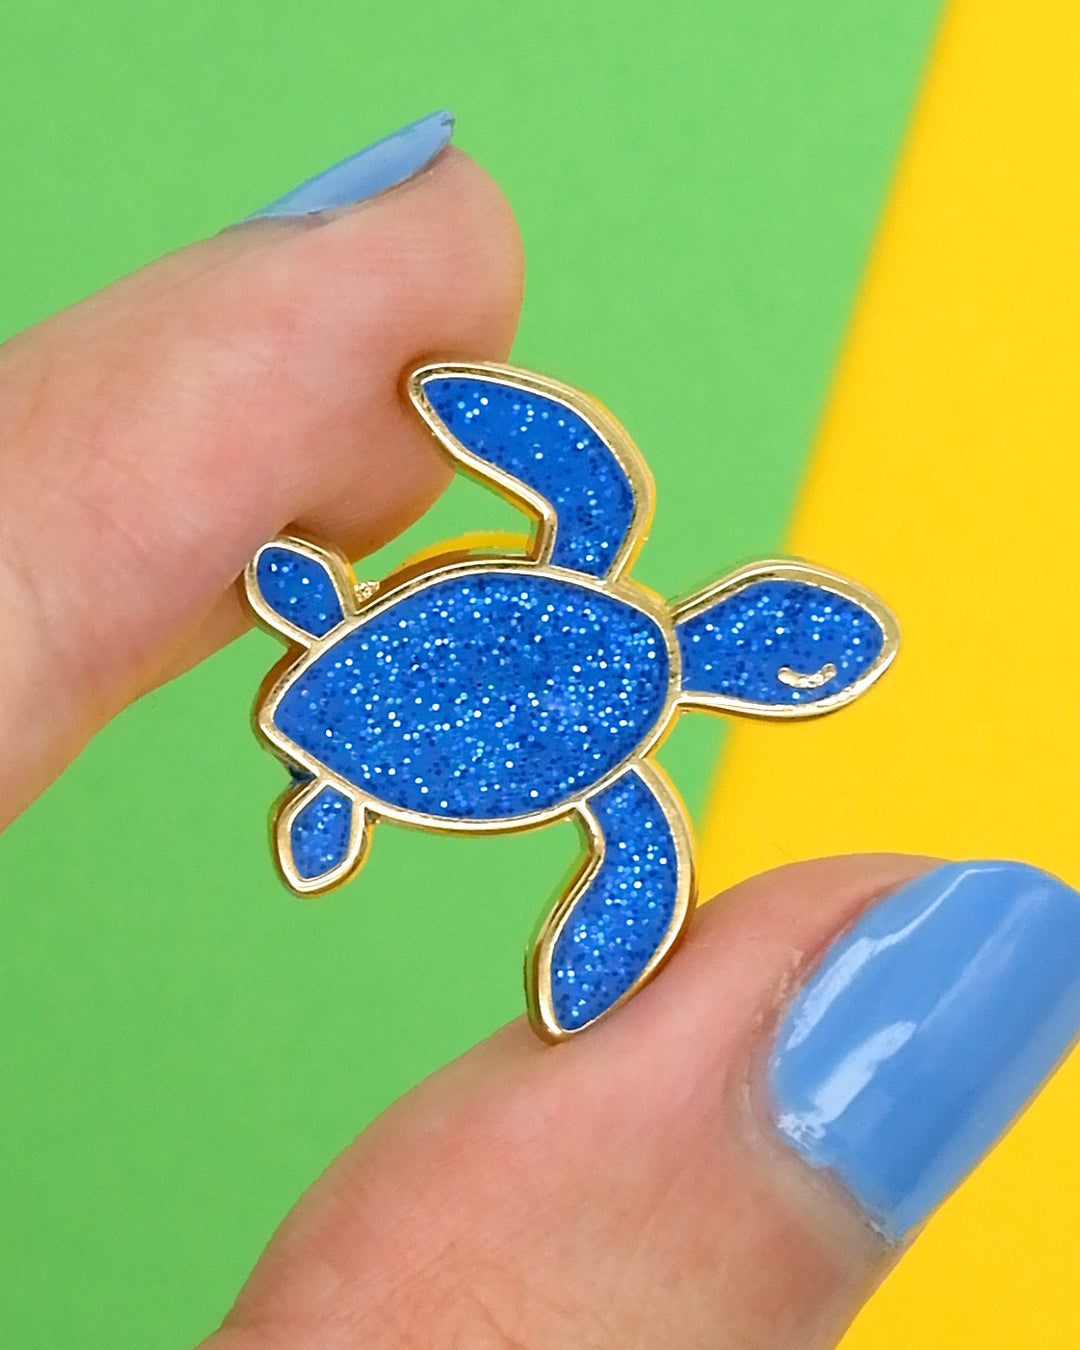 Sea turtle glitter mini pin